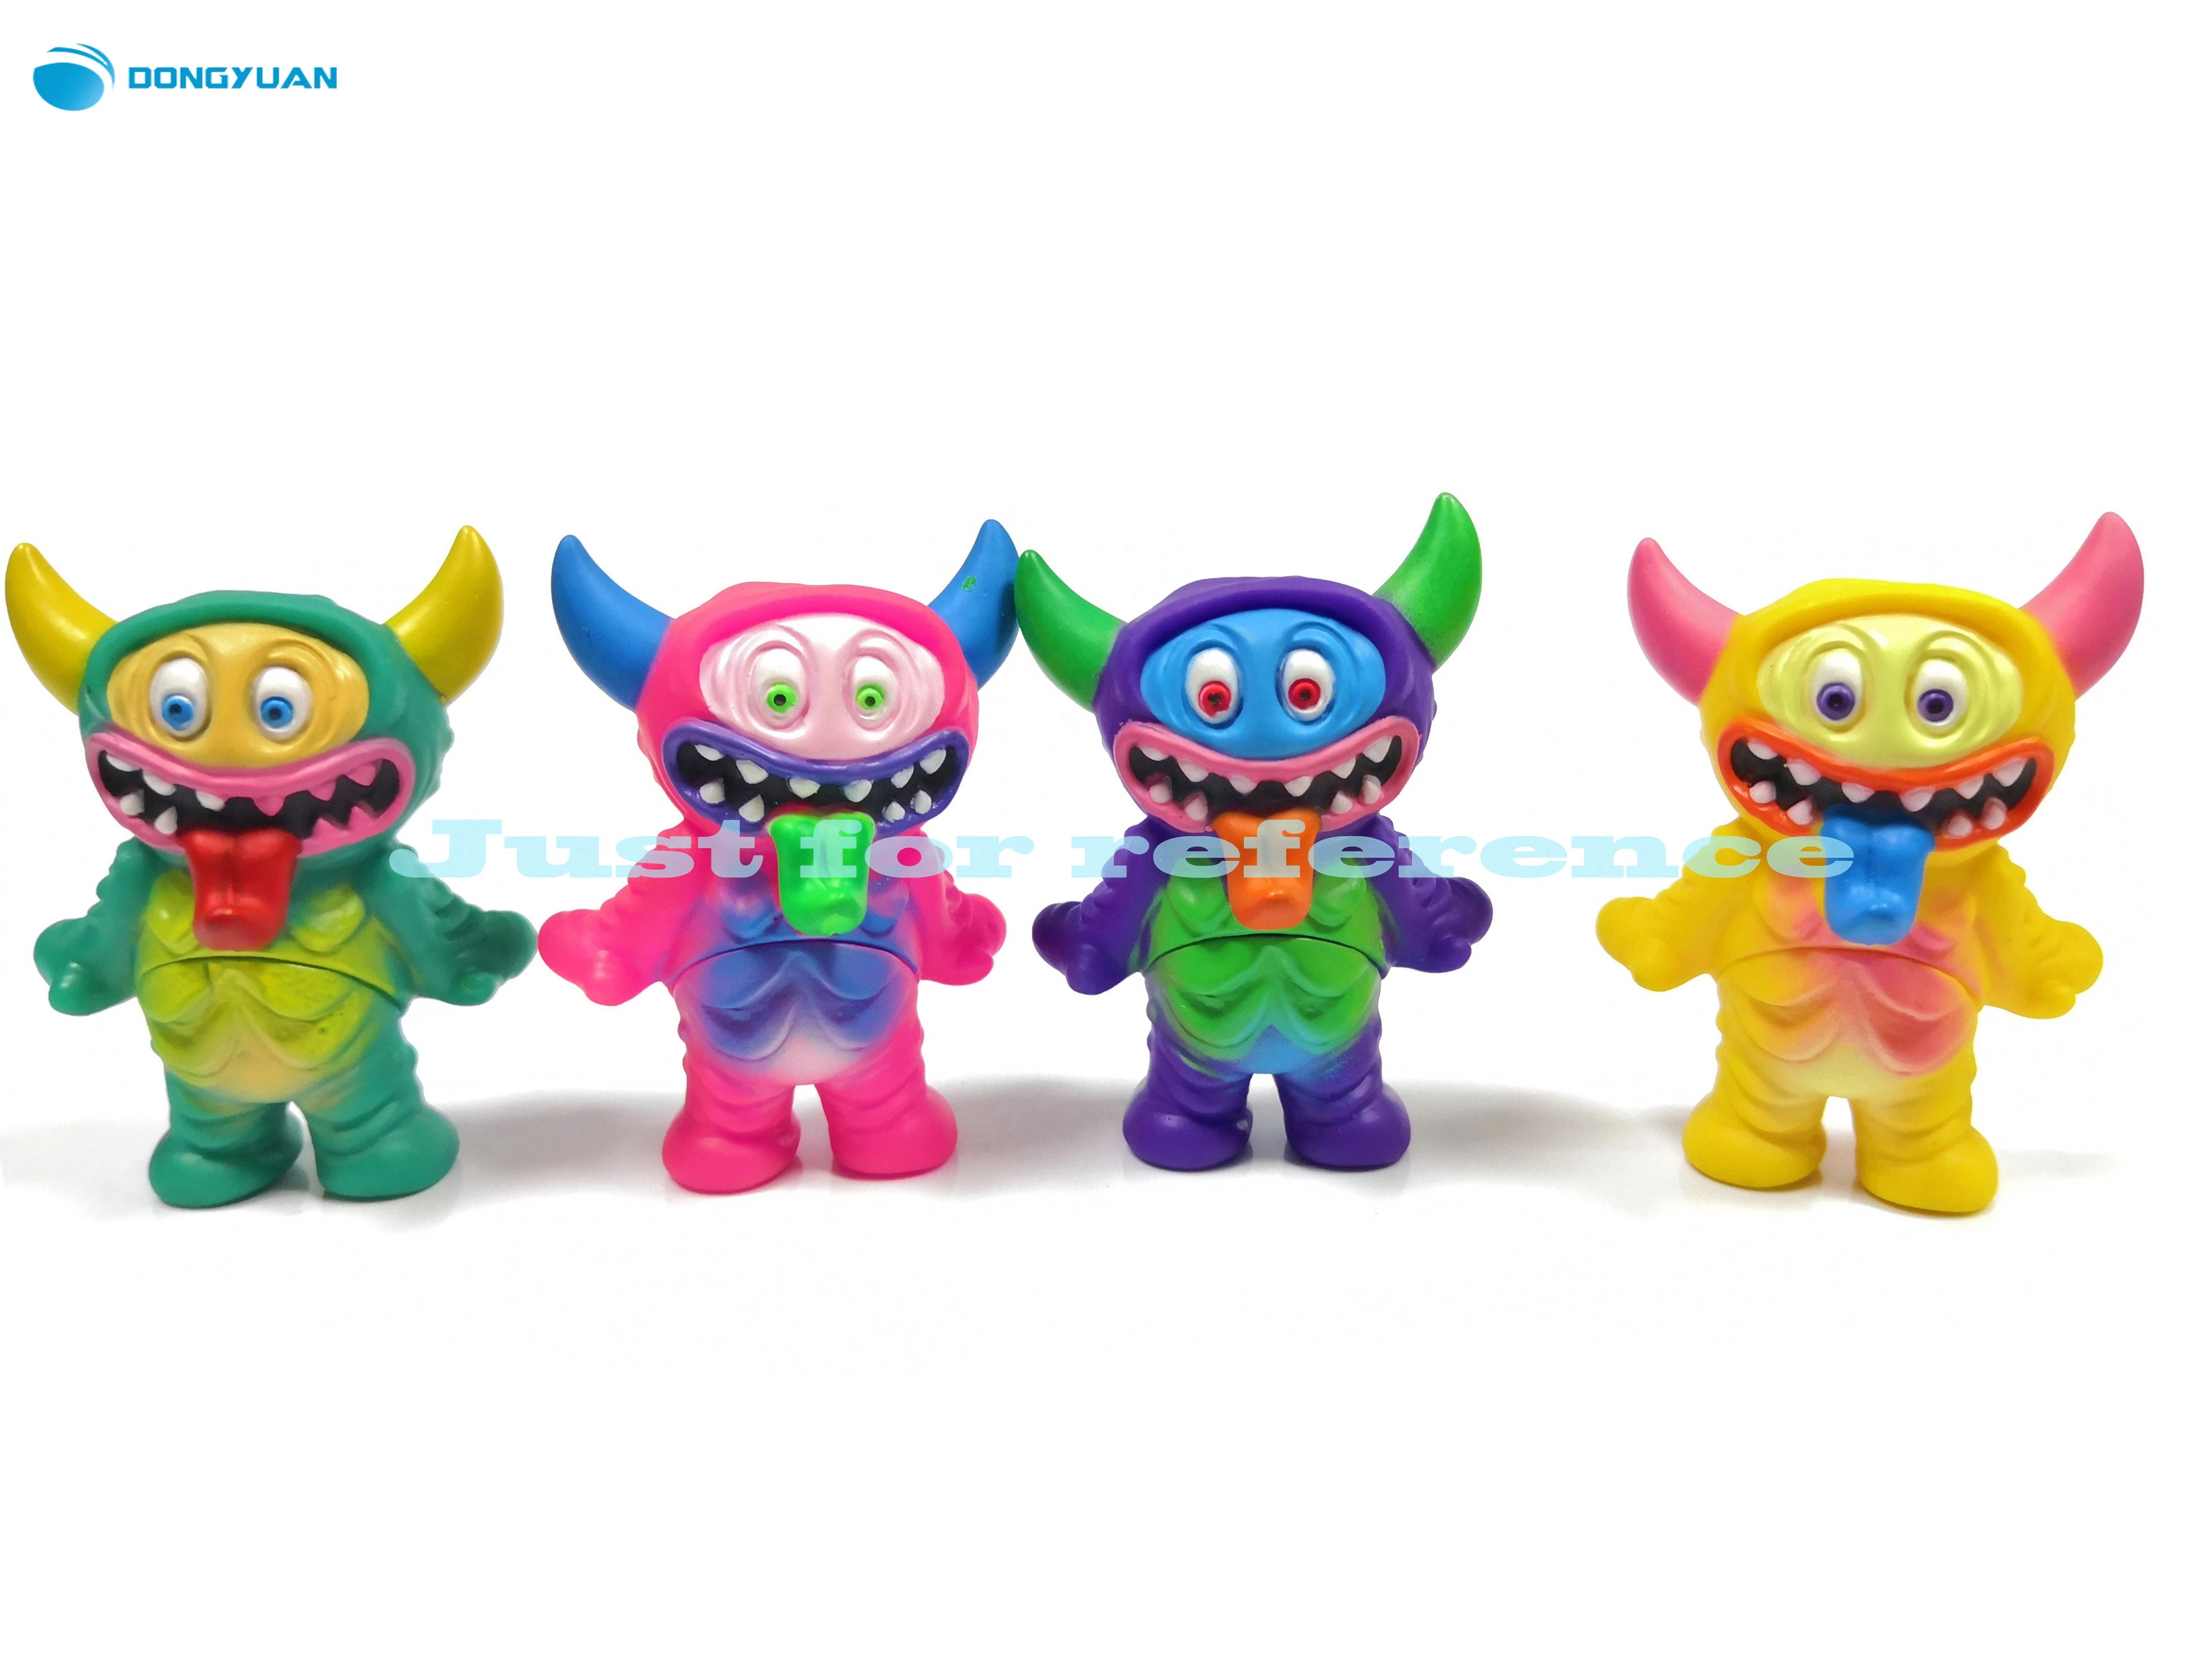 DONGYUAN Custom Mini Figure Designer Art Toy Sofubi/New Design Vinyl Figures Toys/ Soft PVC Toys